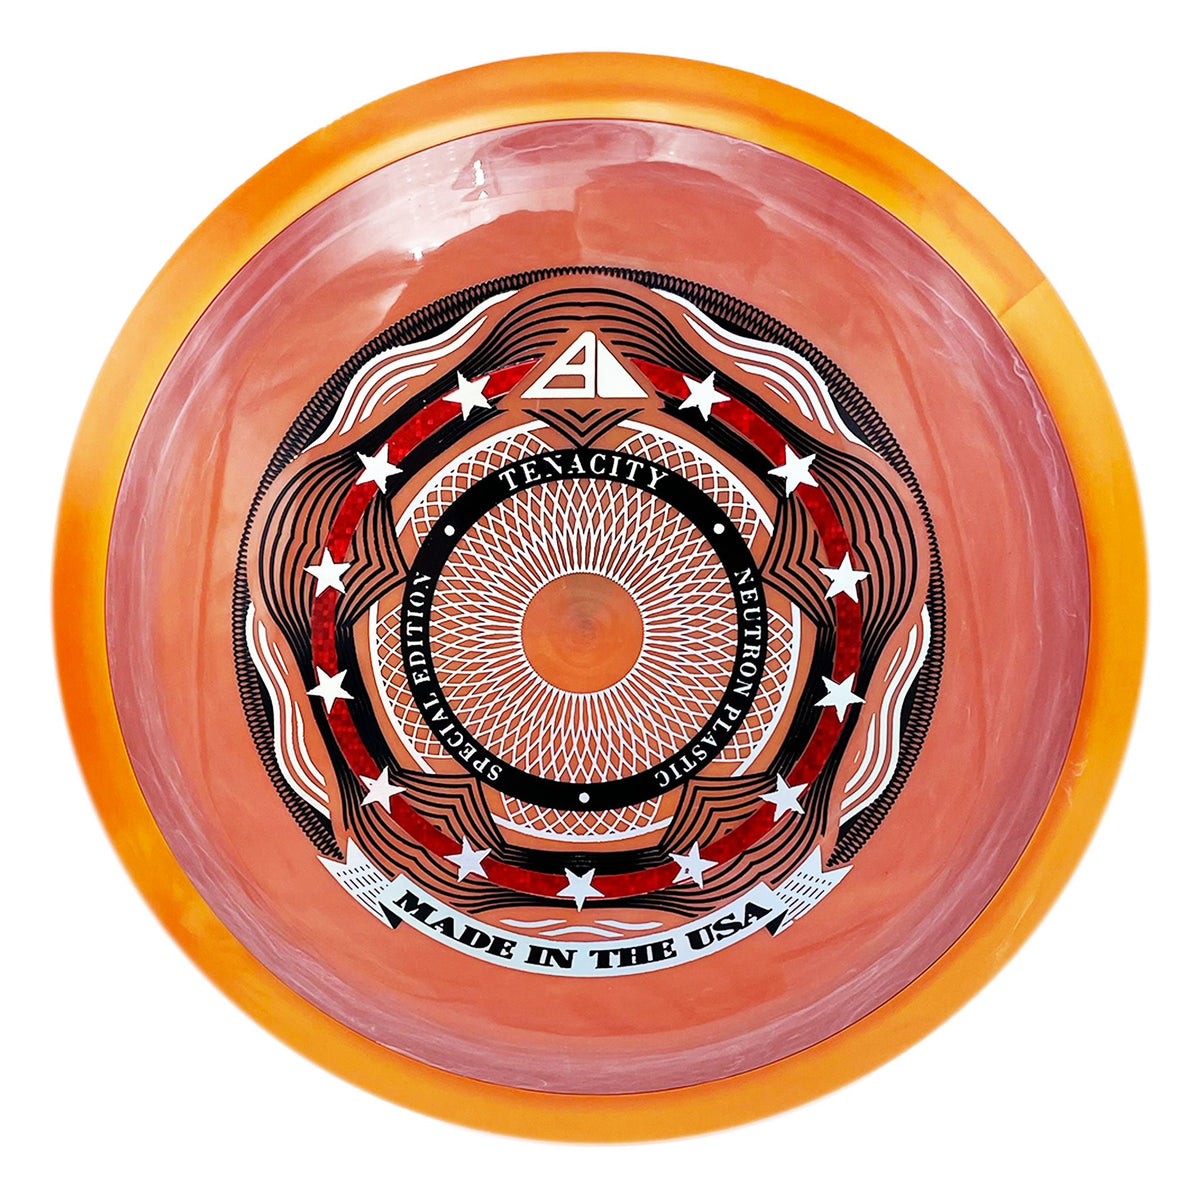 Axiom Discs Neutron Tenacity Special Edition distance driver - Orange/Orange